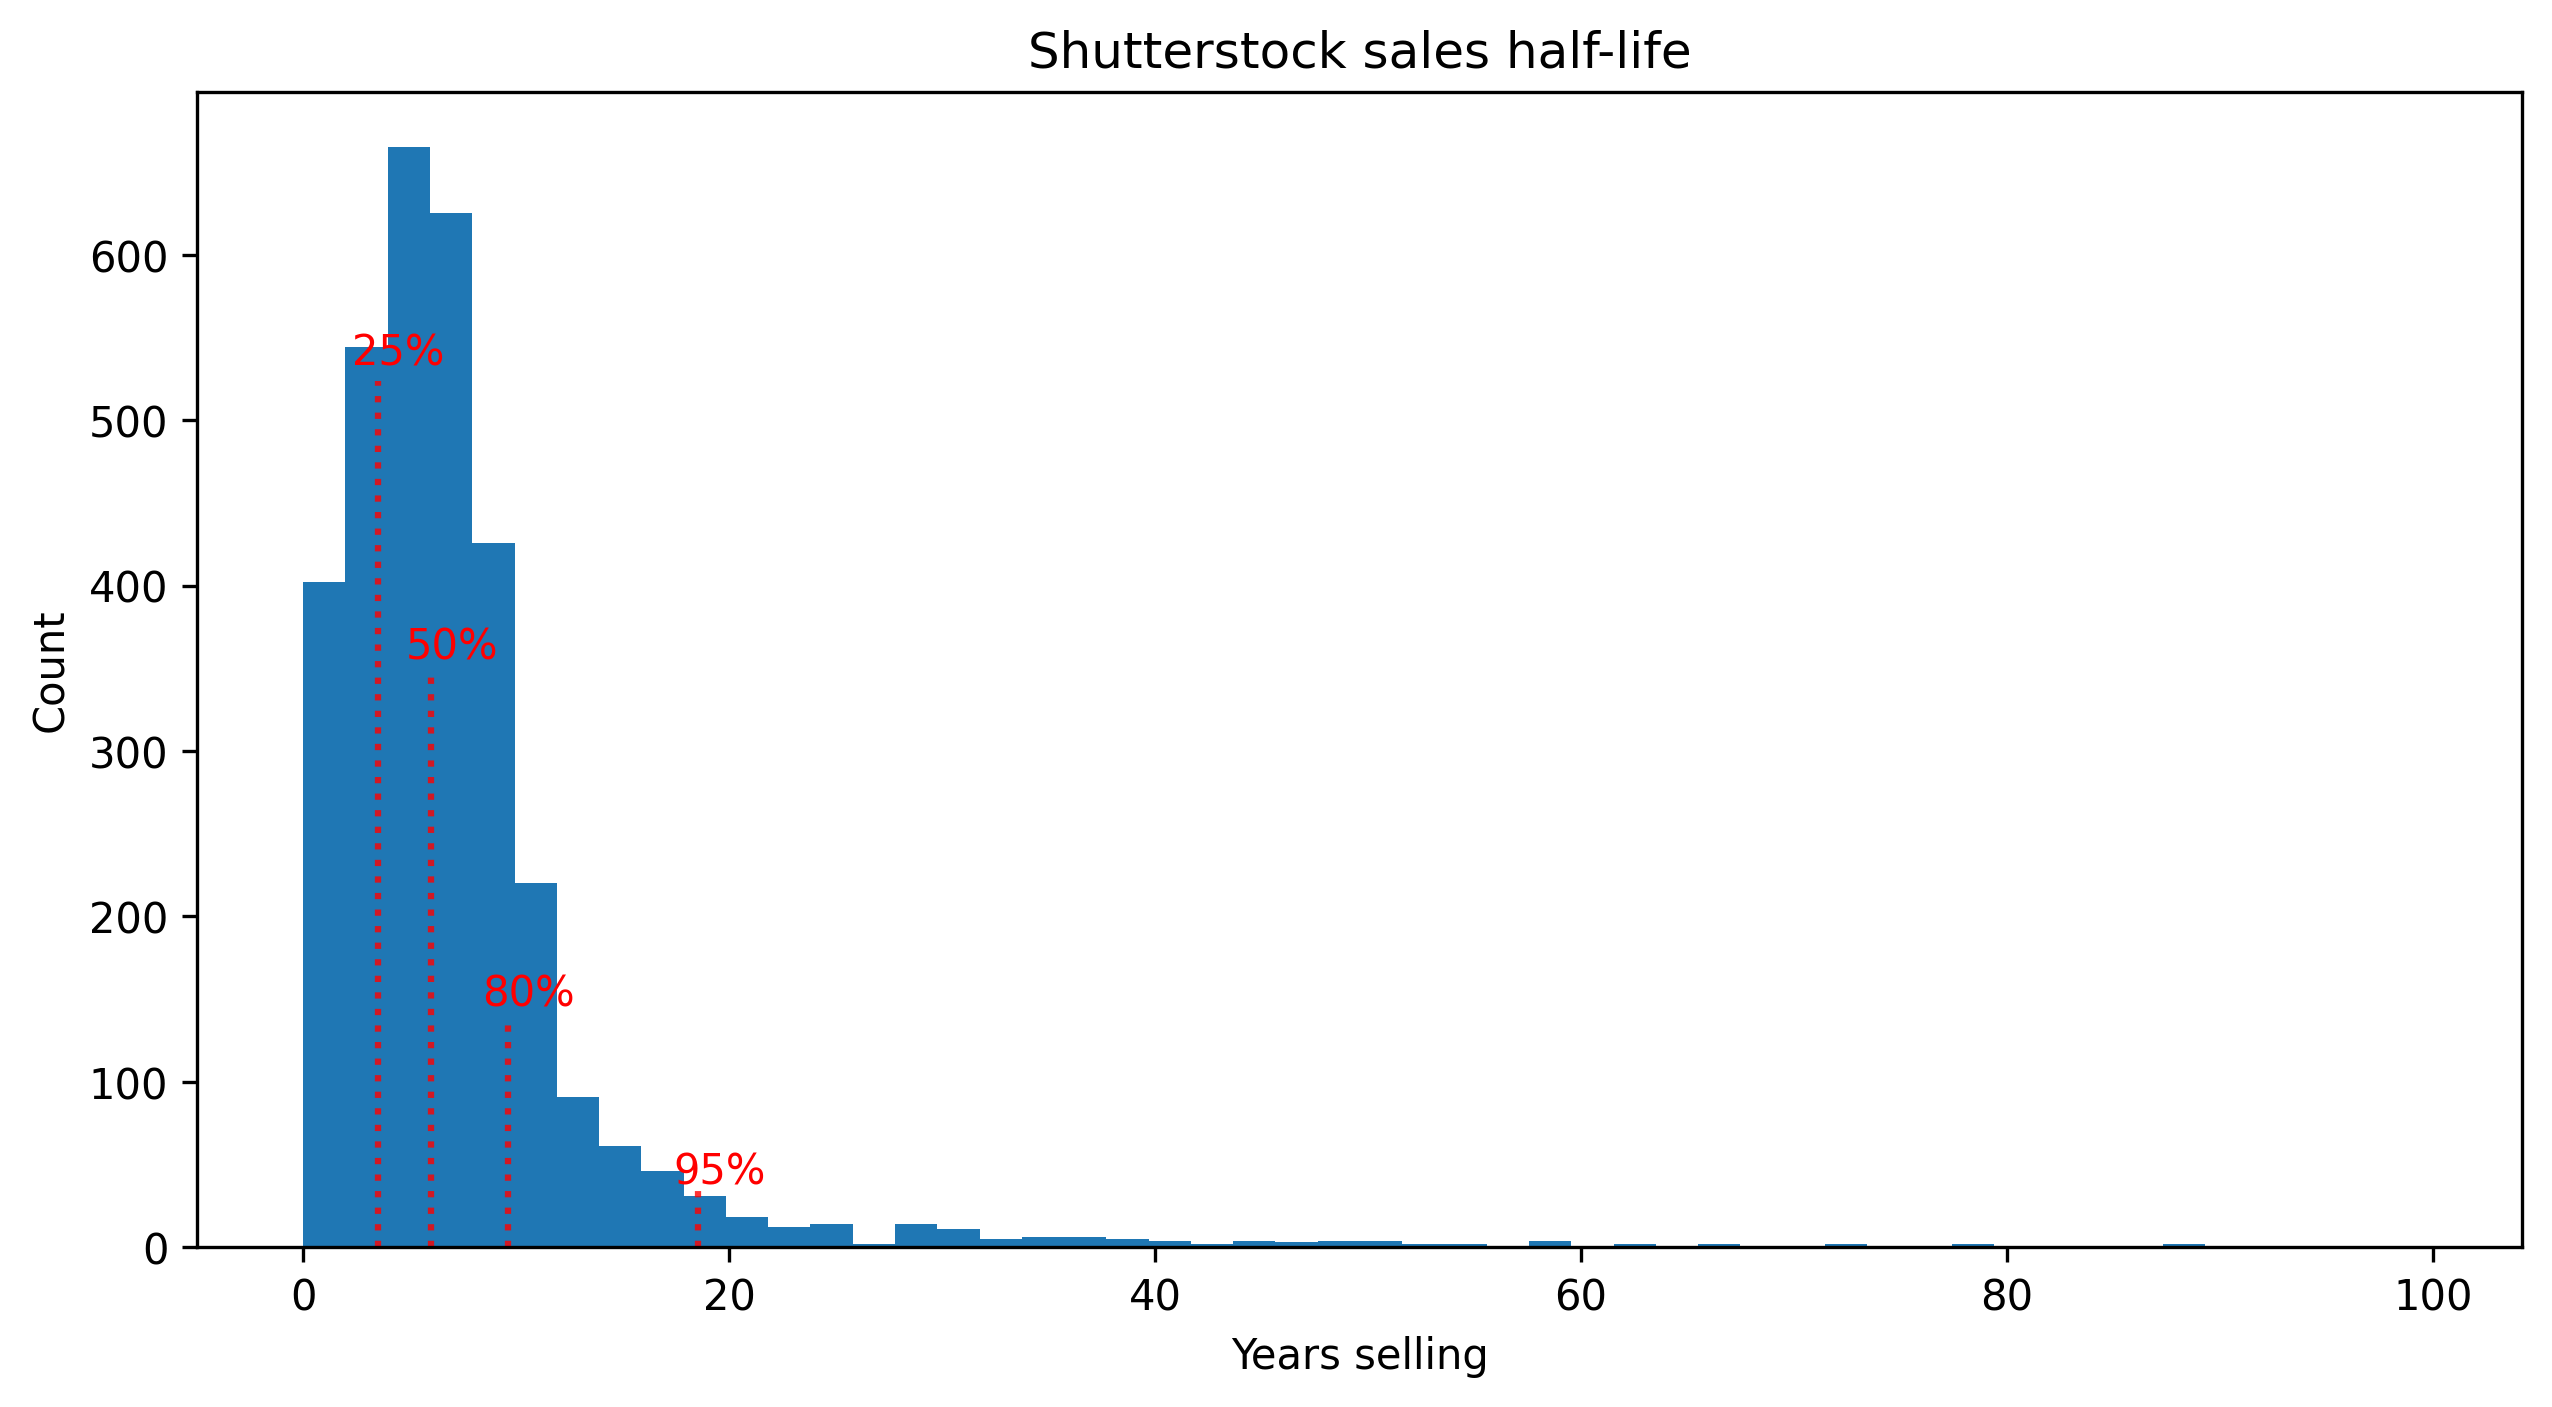 Shutterstock half-life